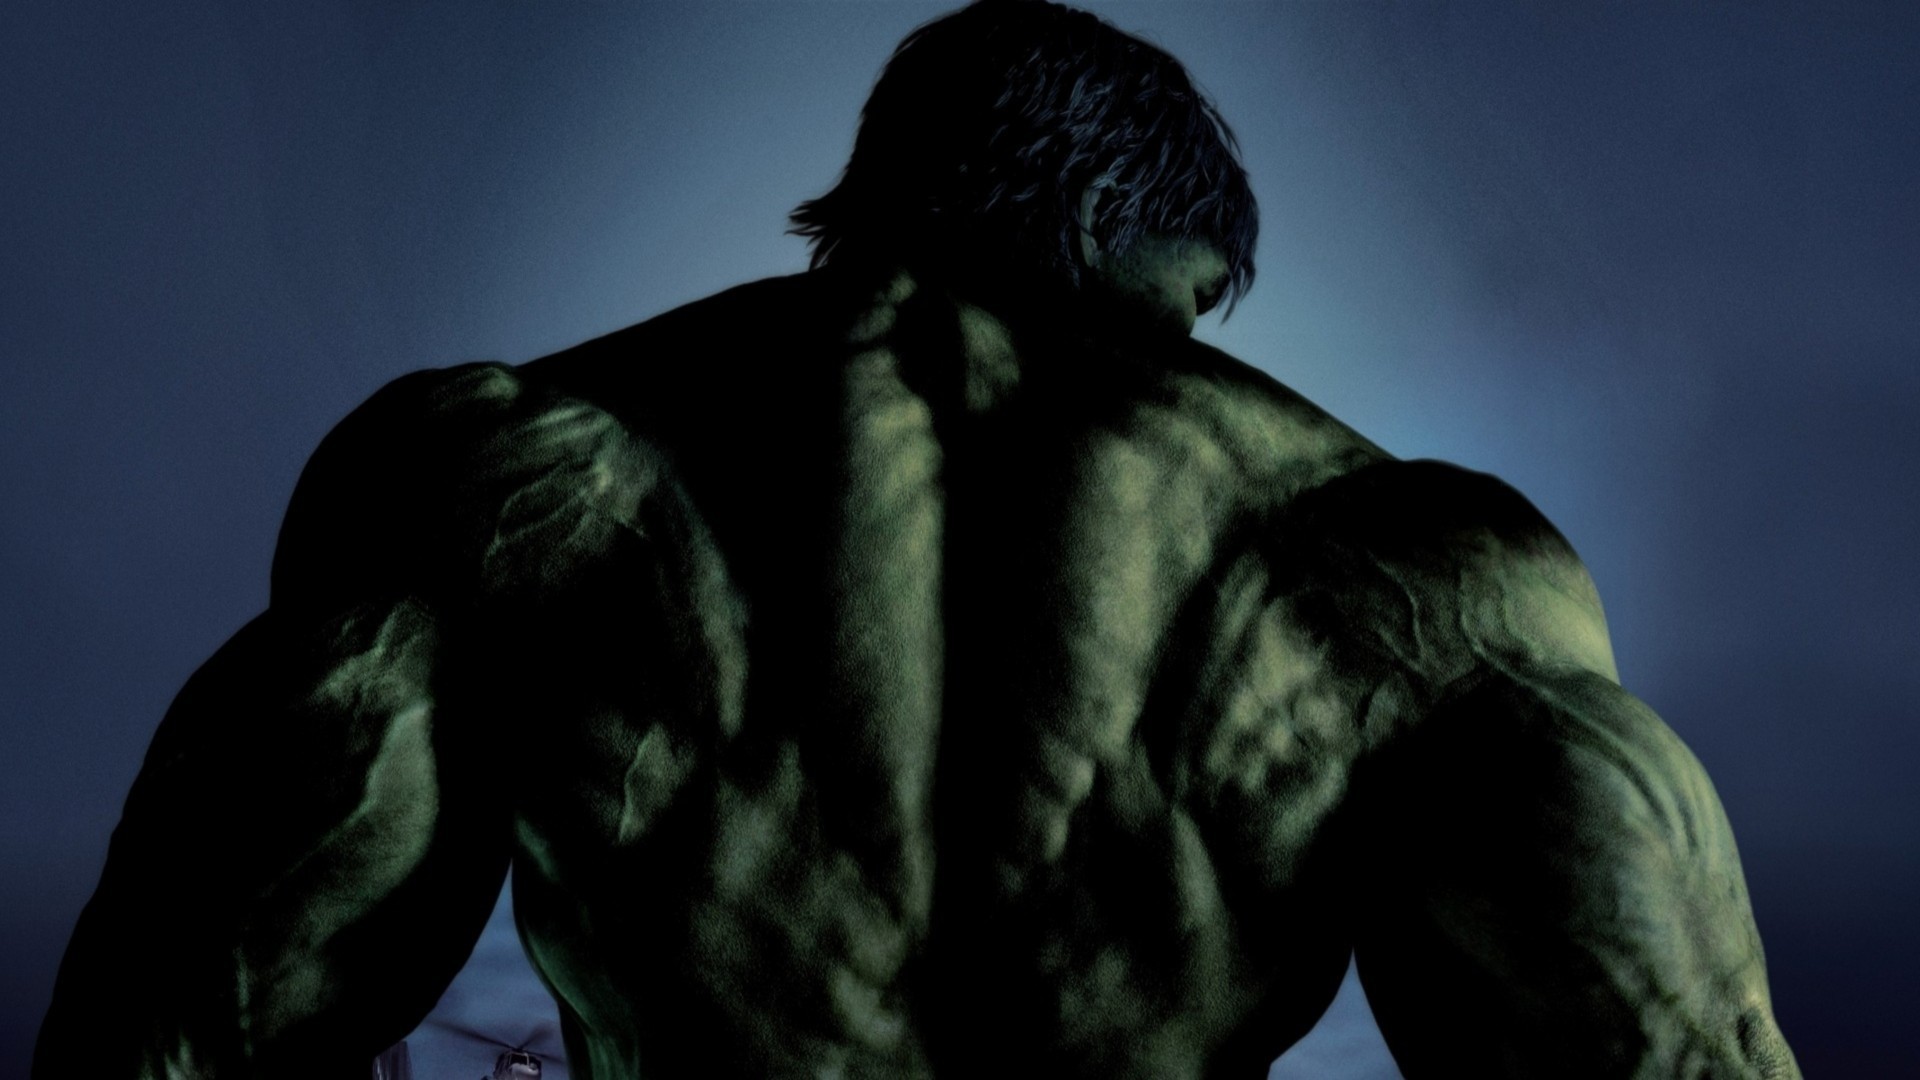 Hulk Smash Avengers HD Wallpaper Background Image